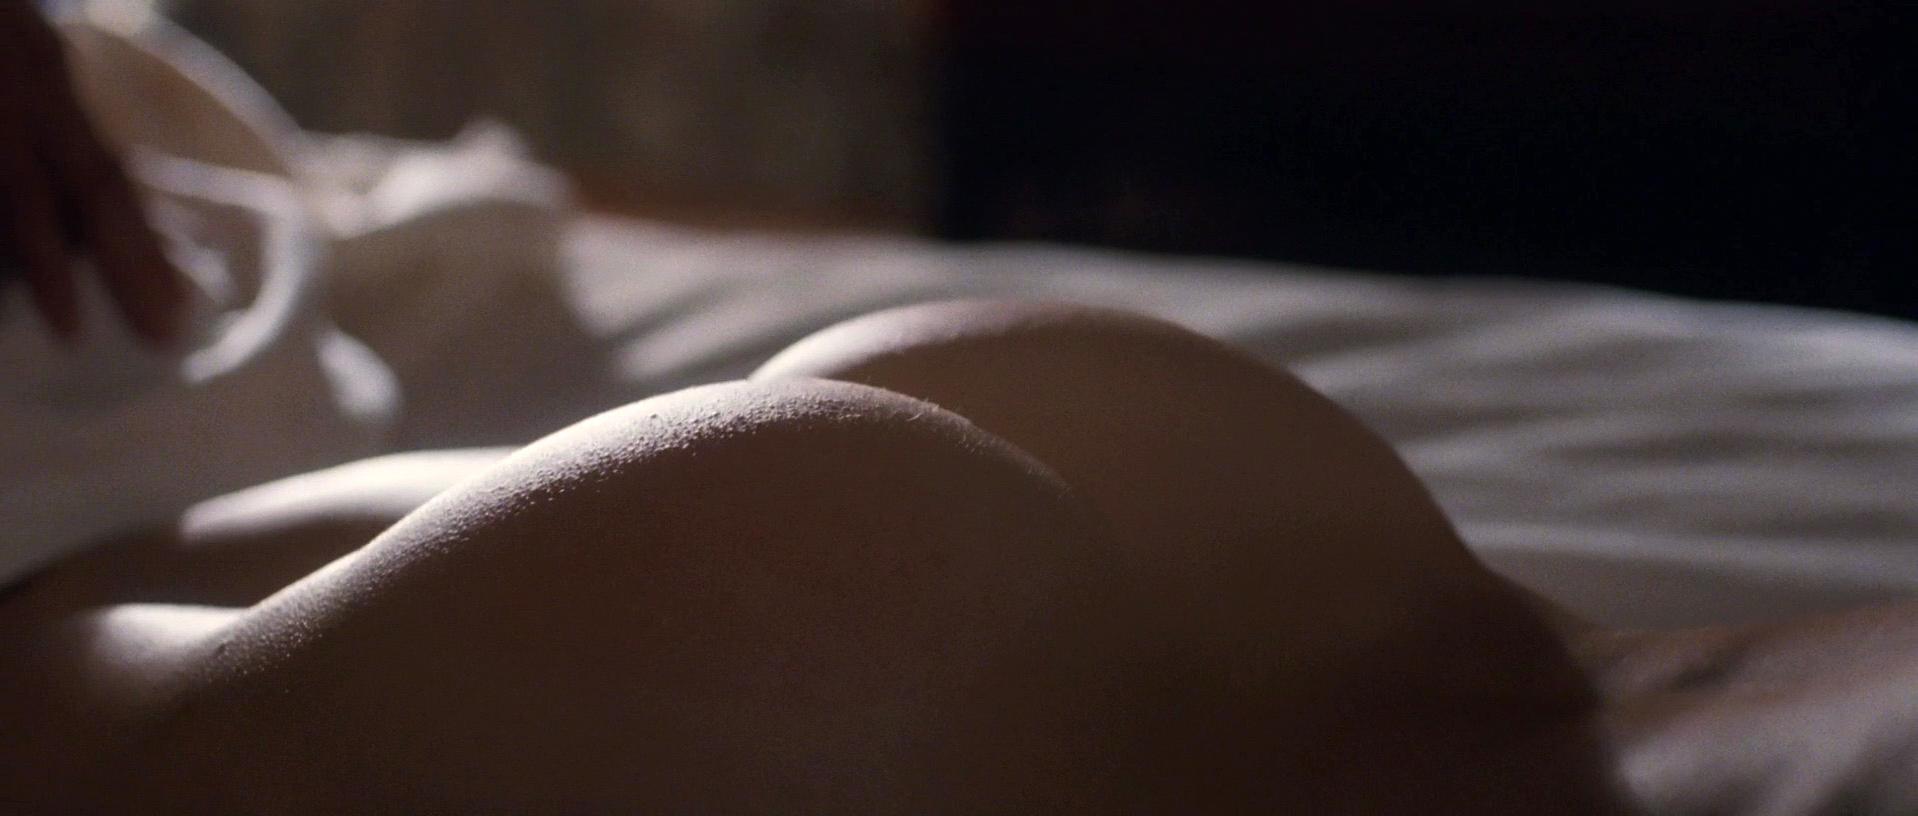 Jessica Alba Goes Nude For Latest Image